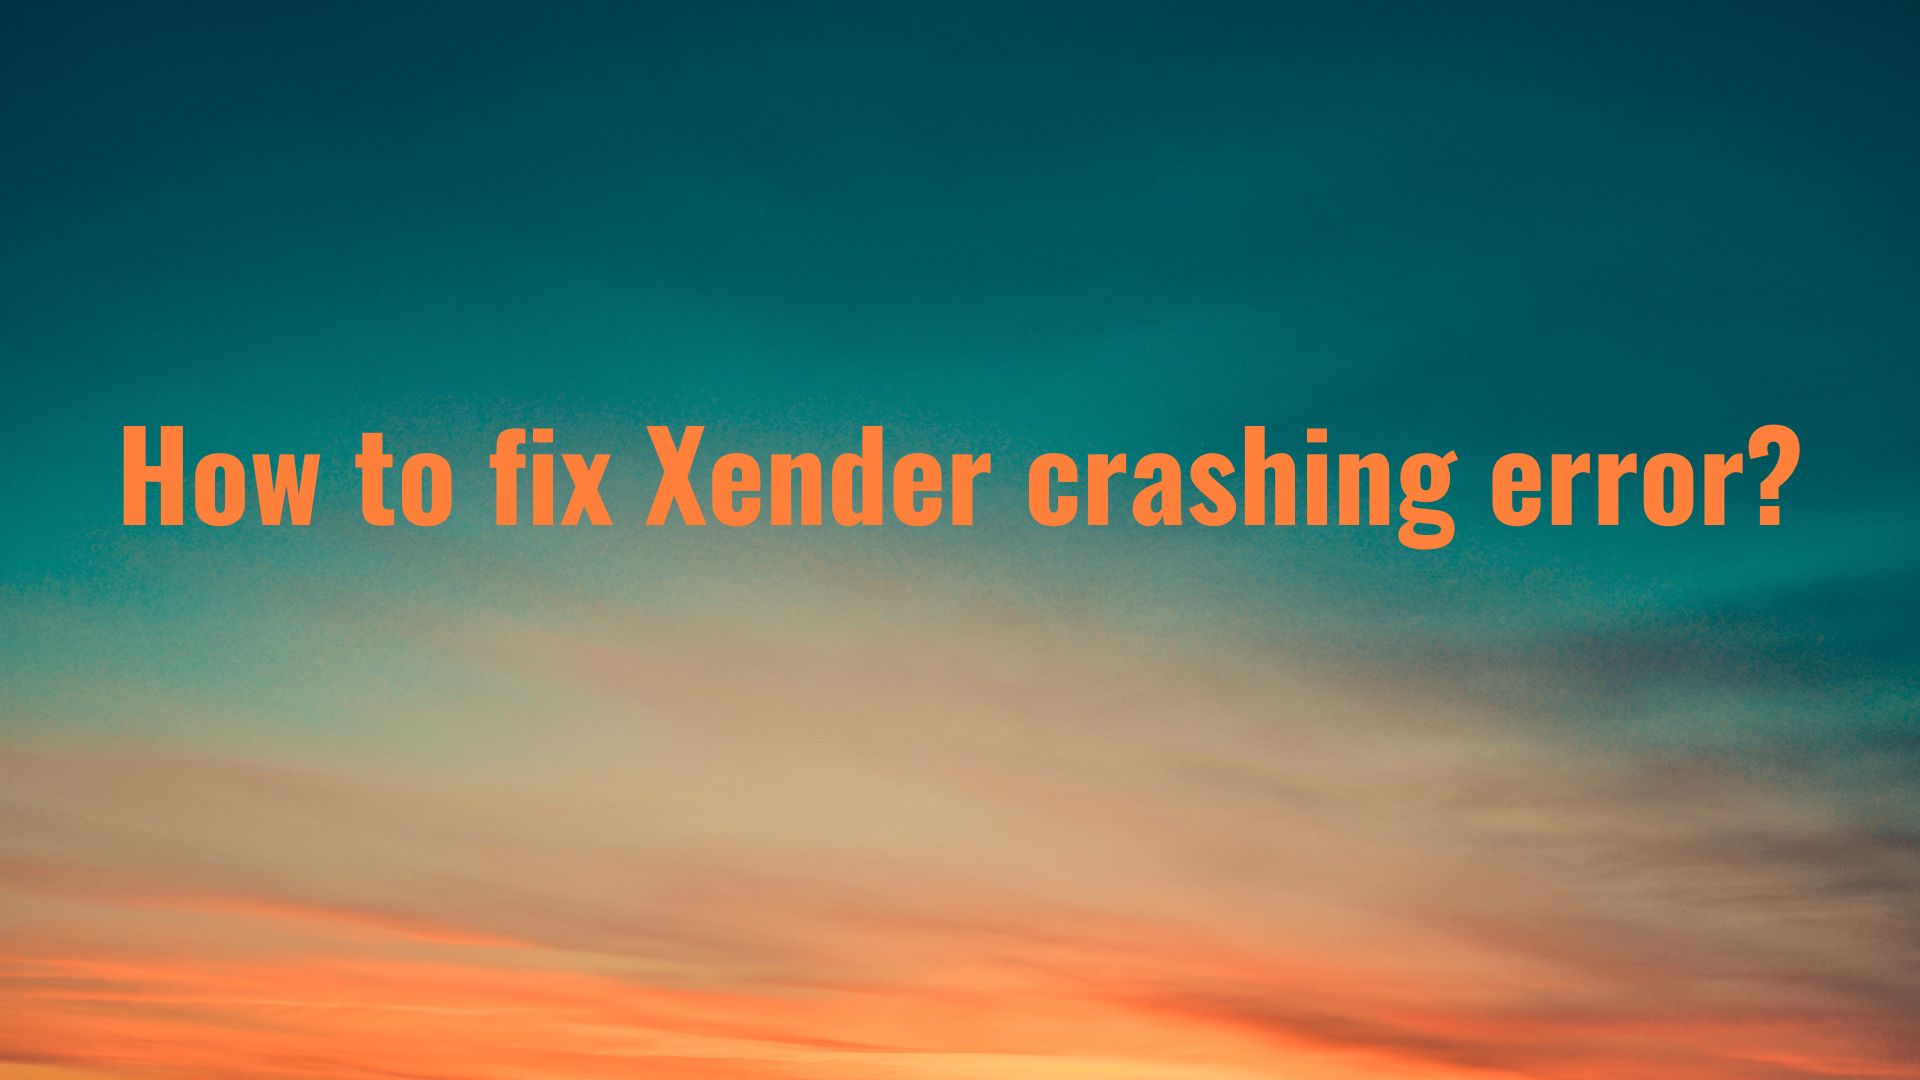 How to fix Xender crashing error (2)